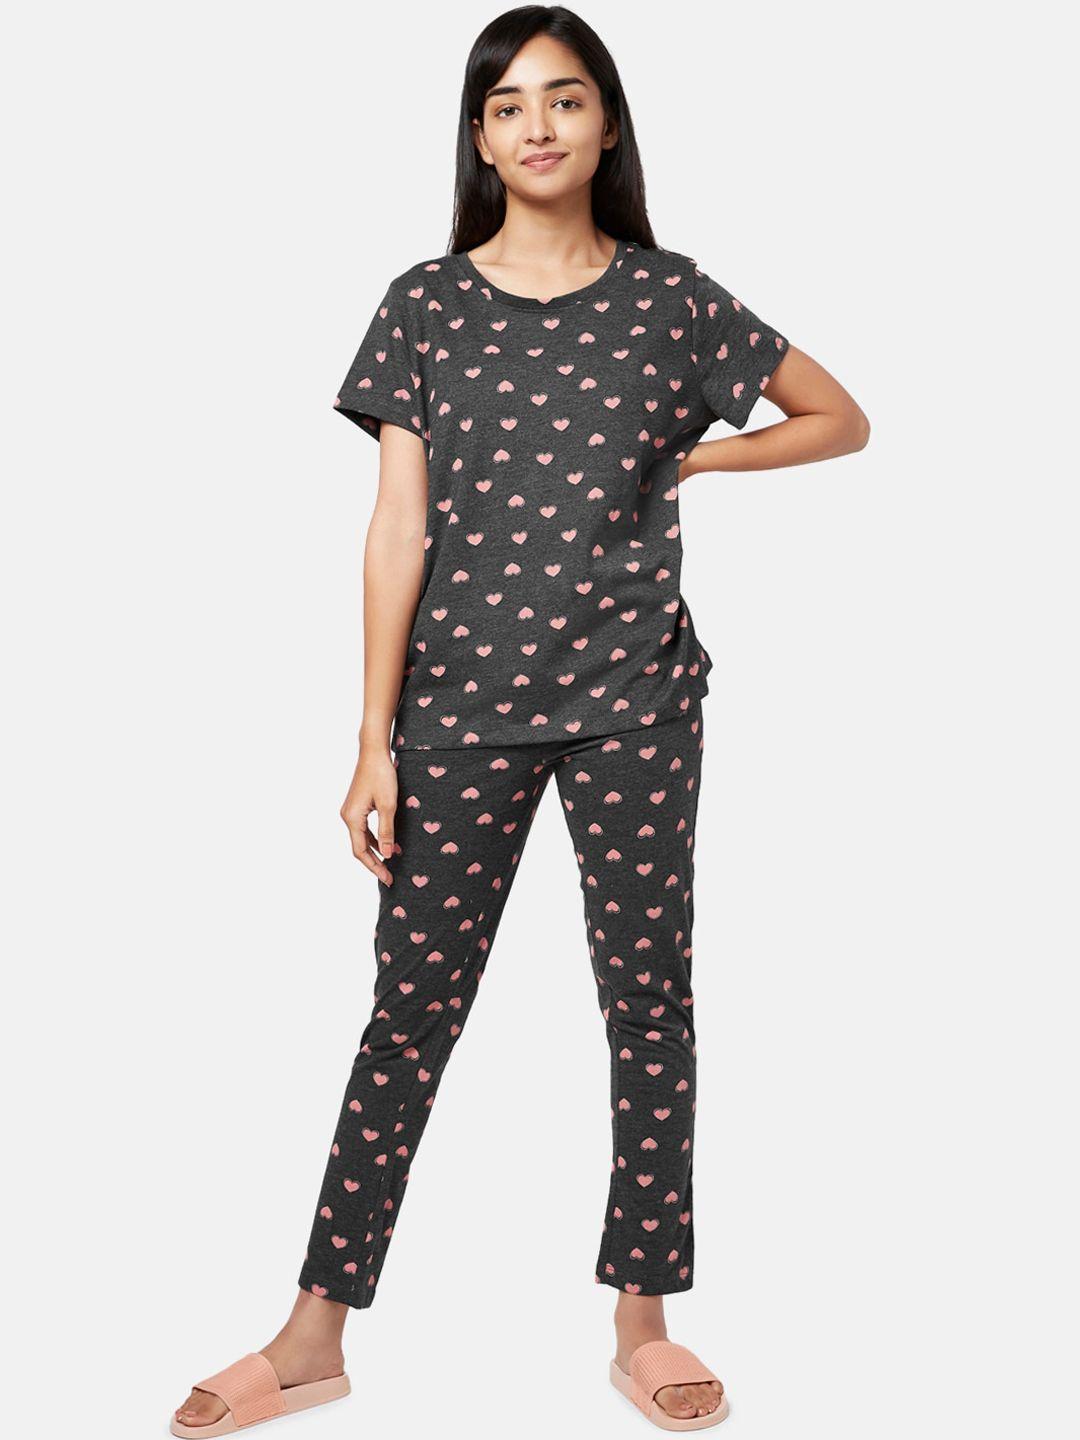 yu by pantaloons women charcoal & pink printed night suit